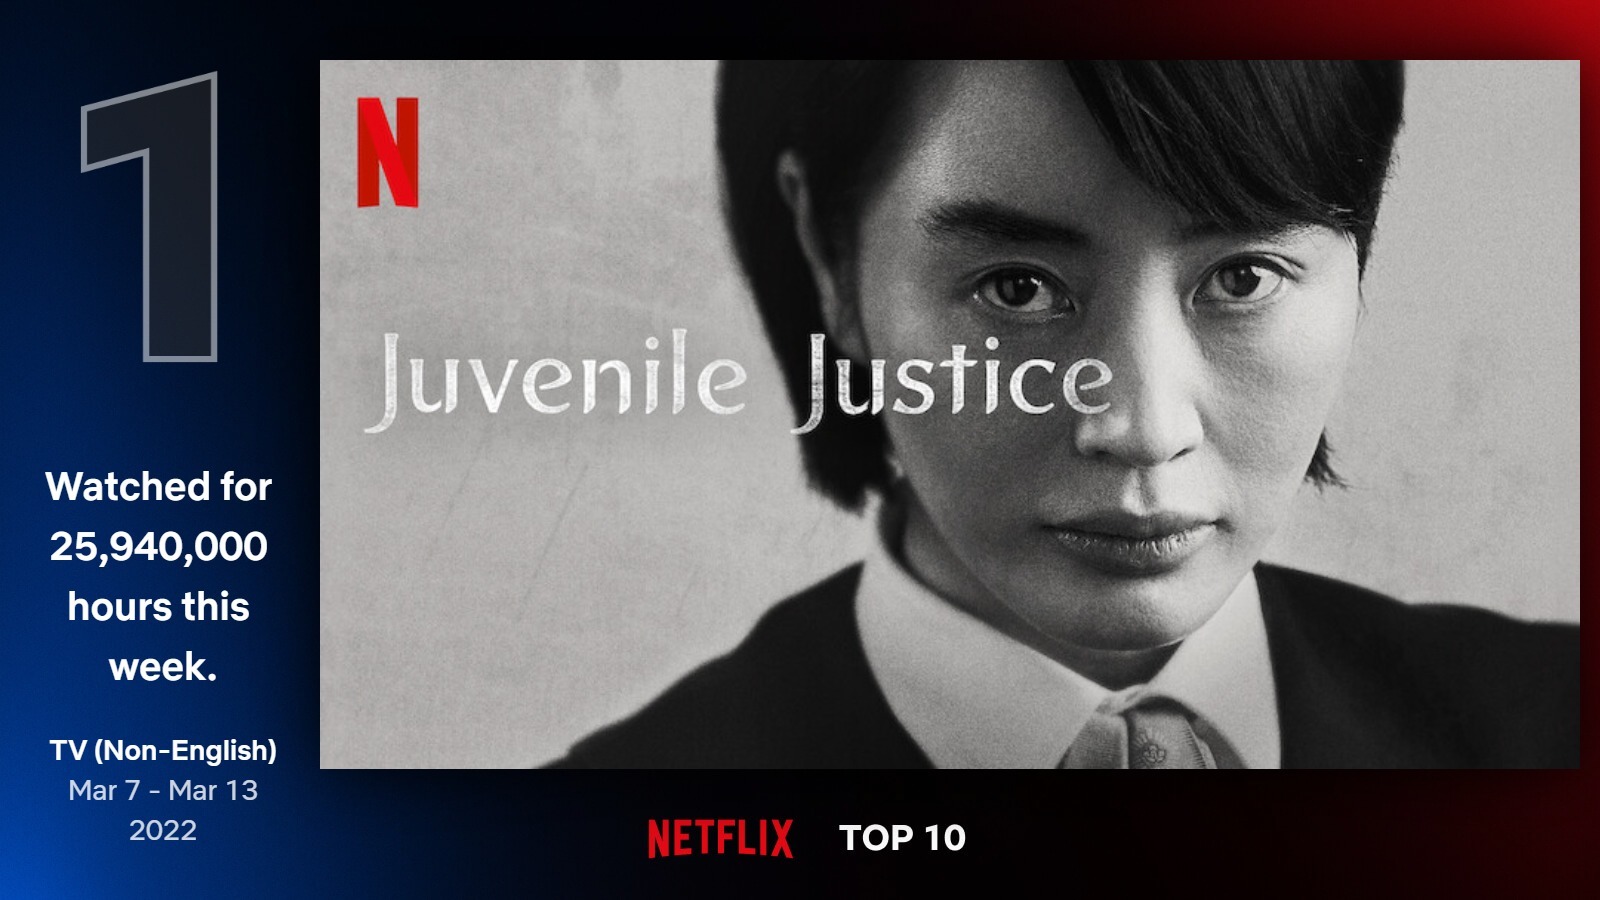 Jumlah jam tontonan serial Juvenile Justice periode 7-13 Maret 2022. (Sumber gambar: Netflix)